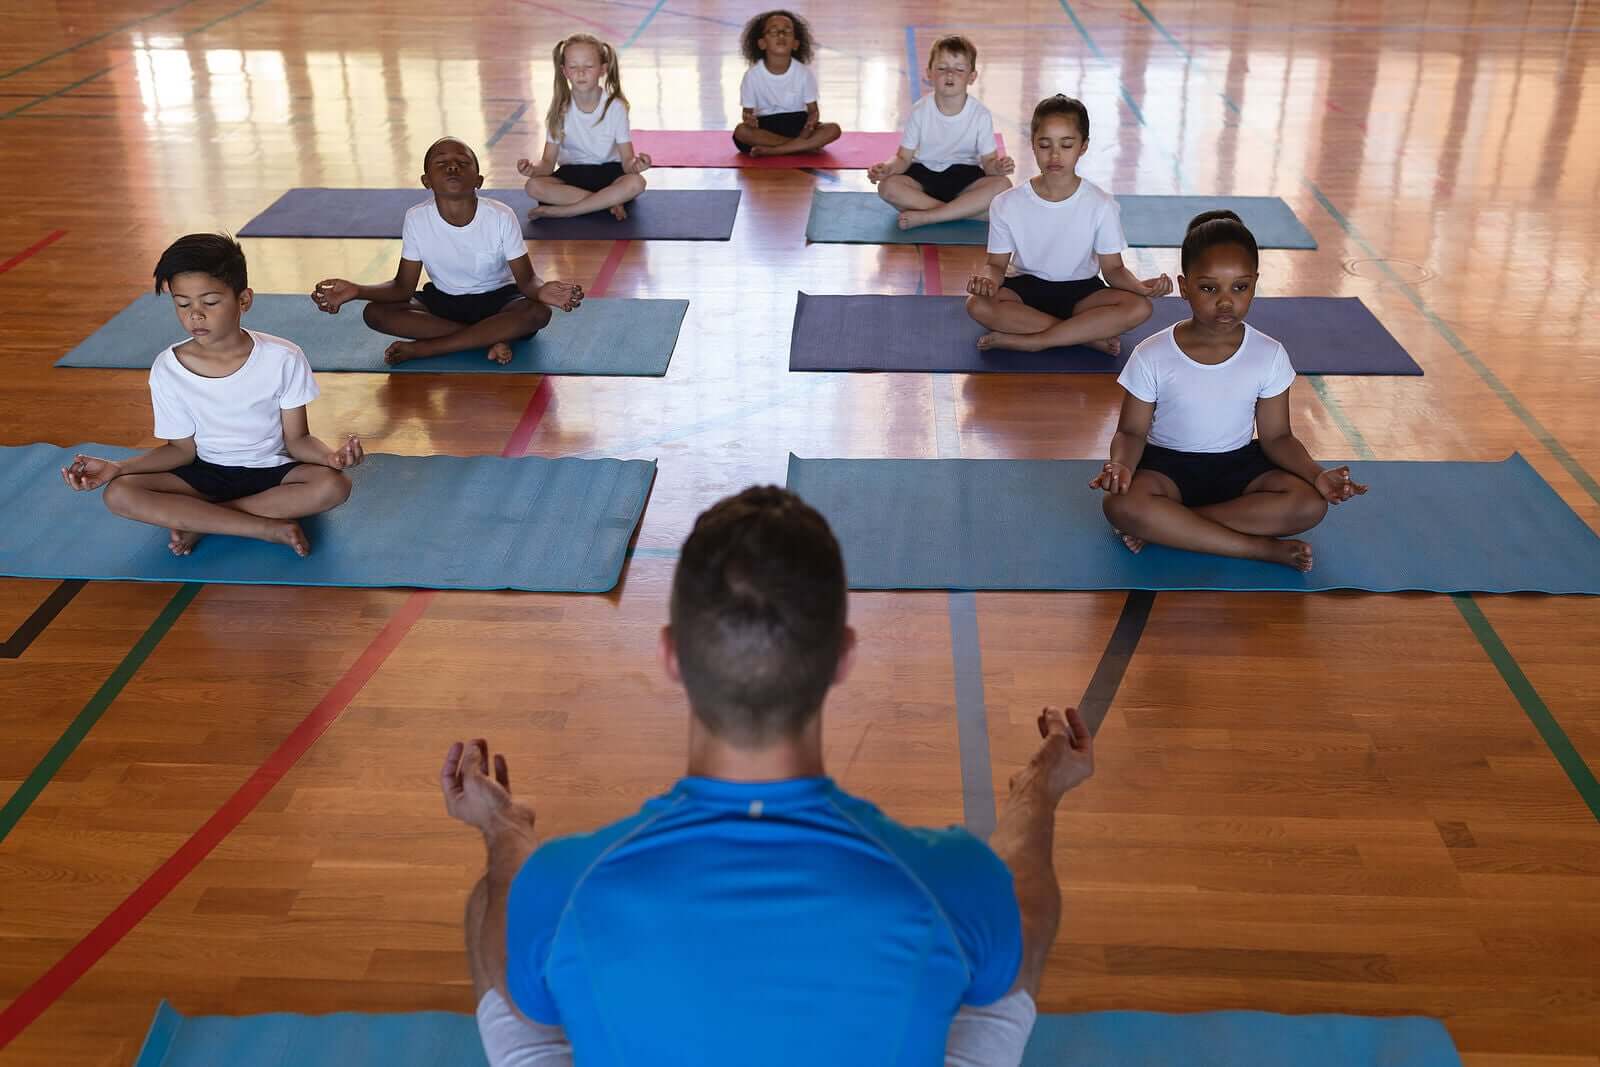 Children practicing yoga in a school gym.